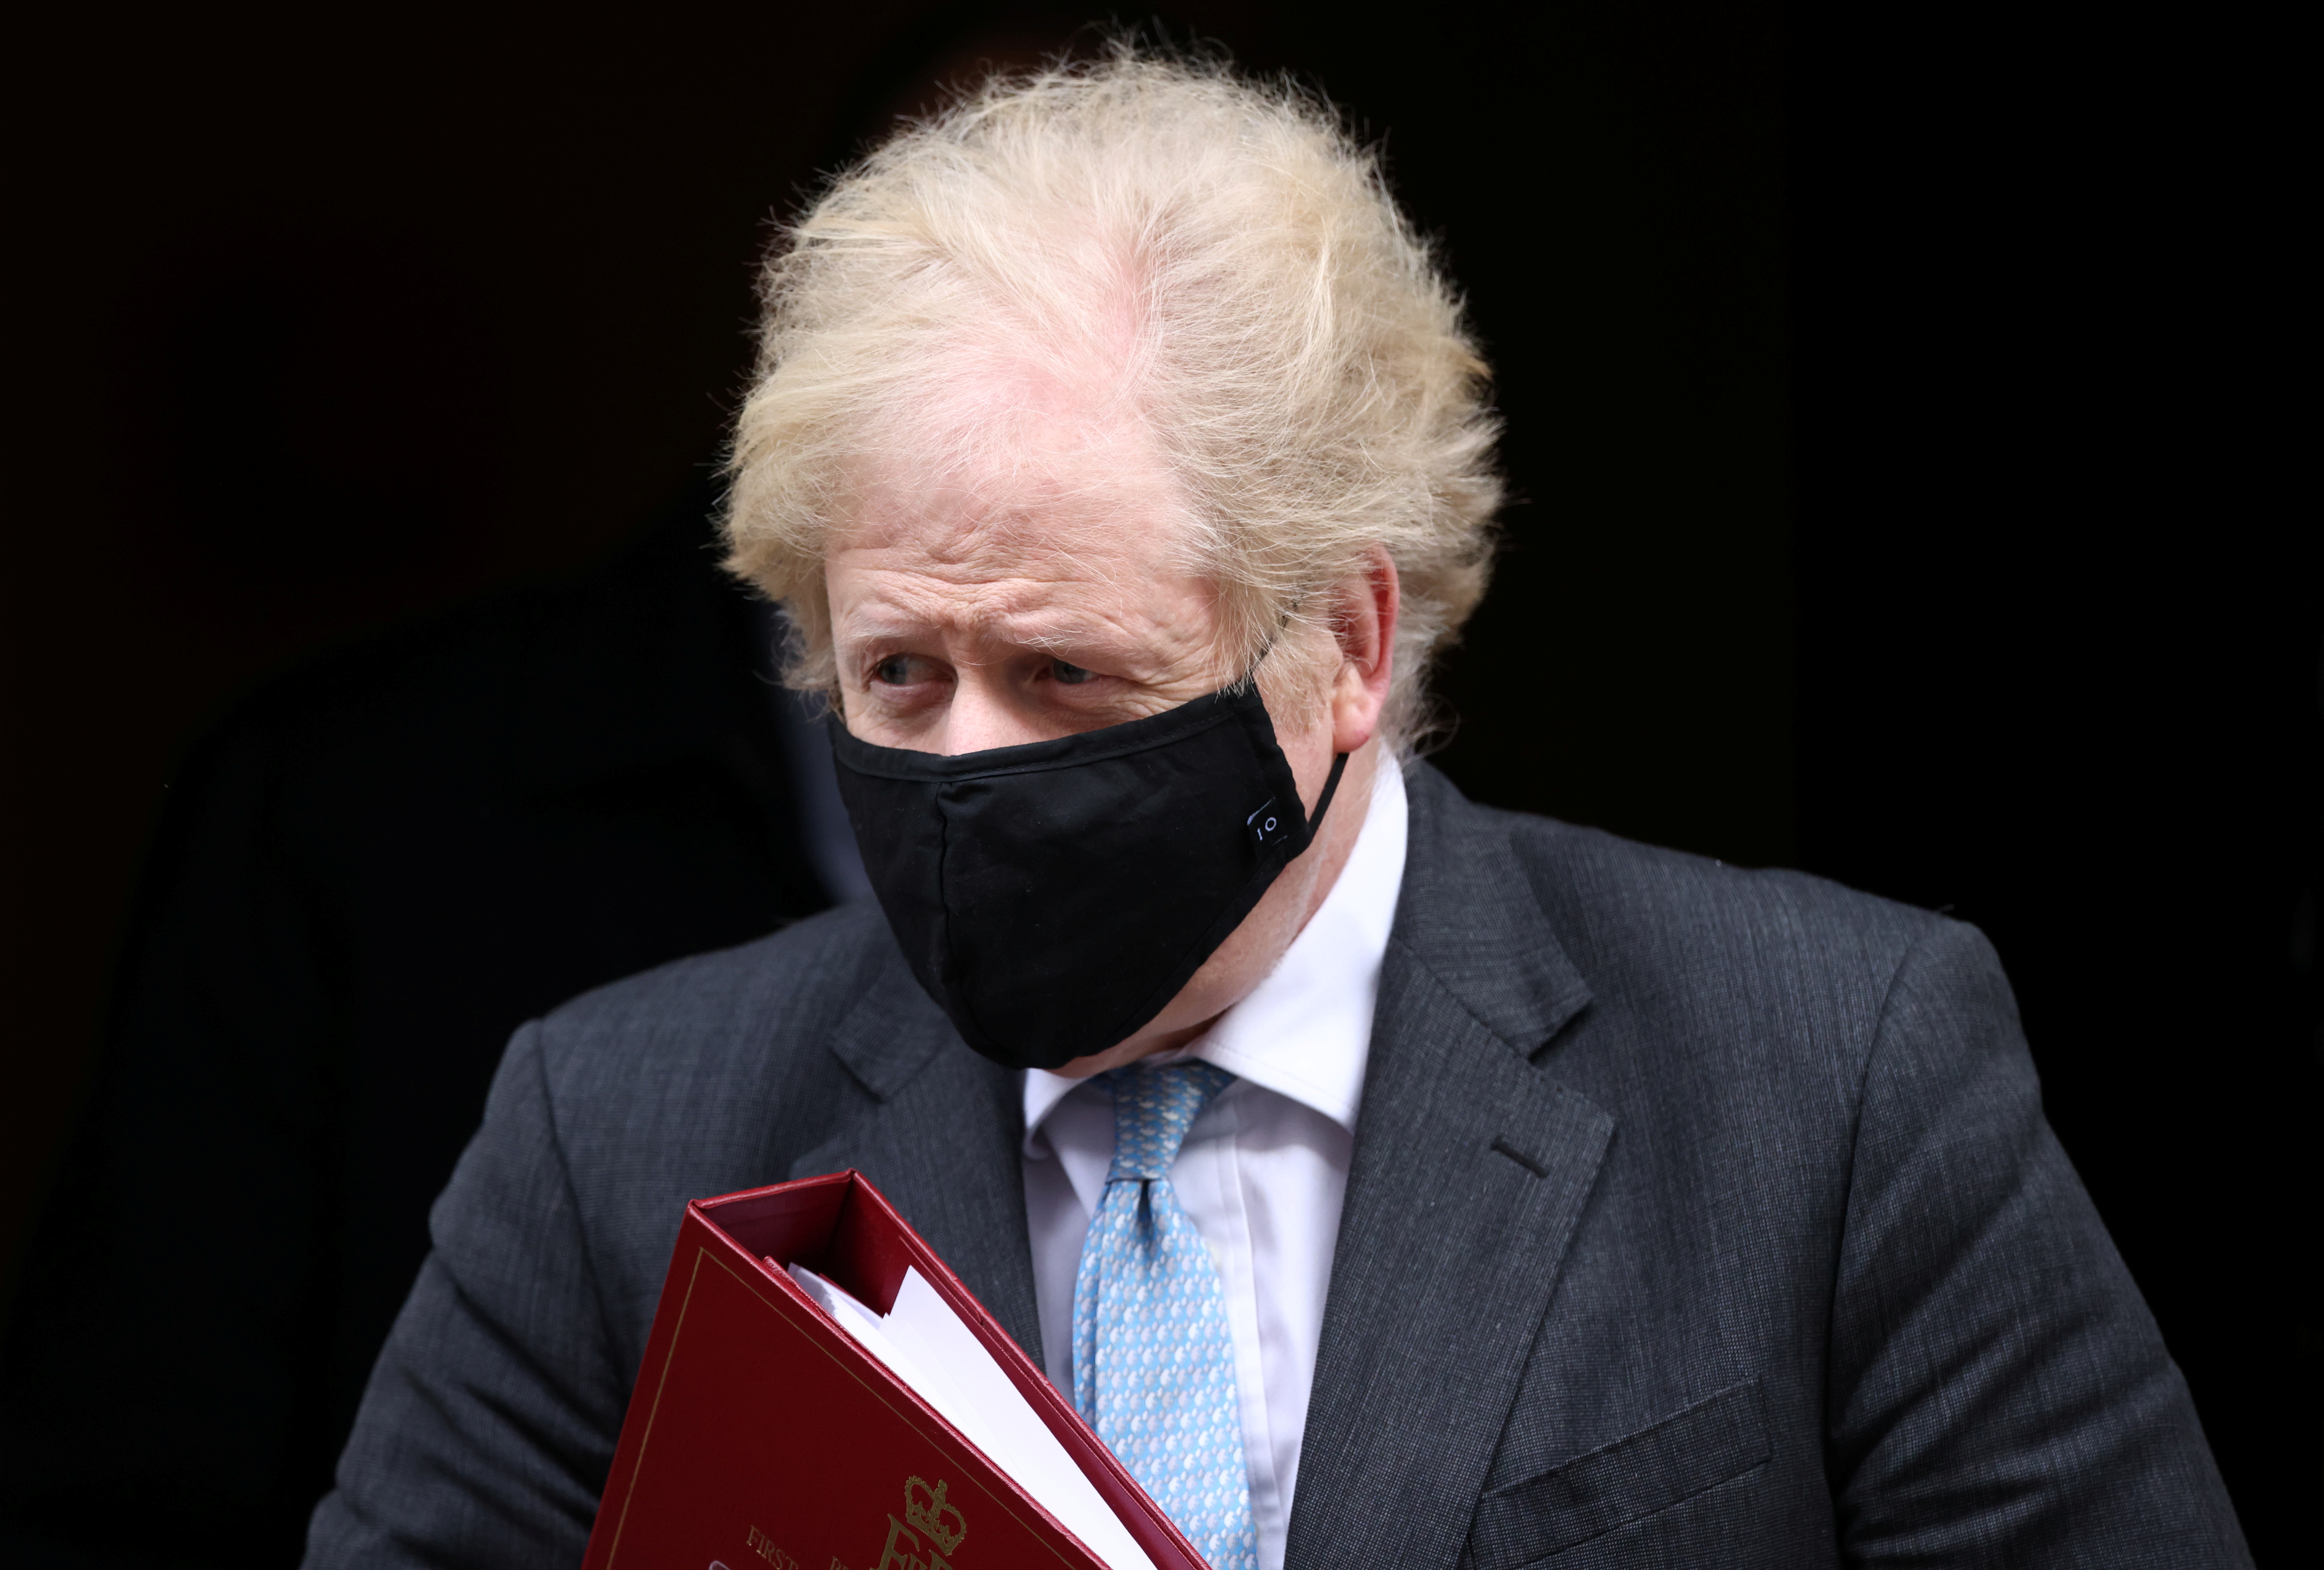 Britain's Prime Minister Boris Johnson leaves Downing Street in London, Britain, February 10, 2021. REUTERS/Henry Nicholls